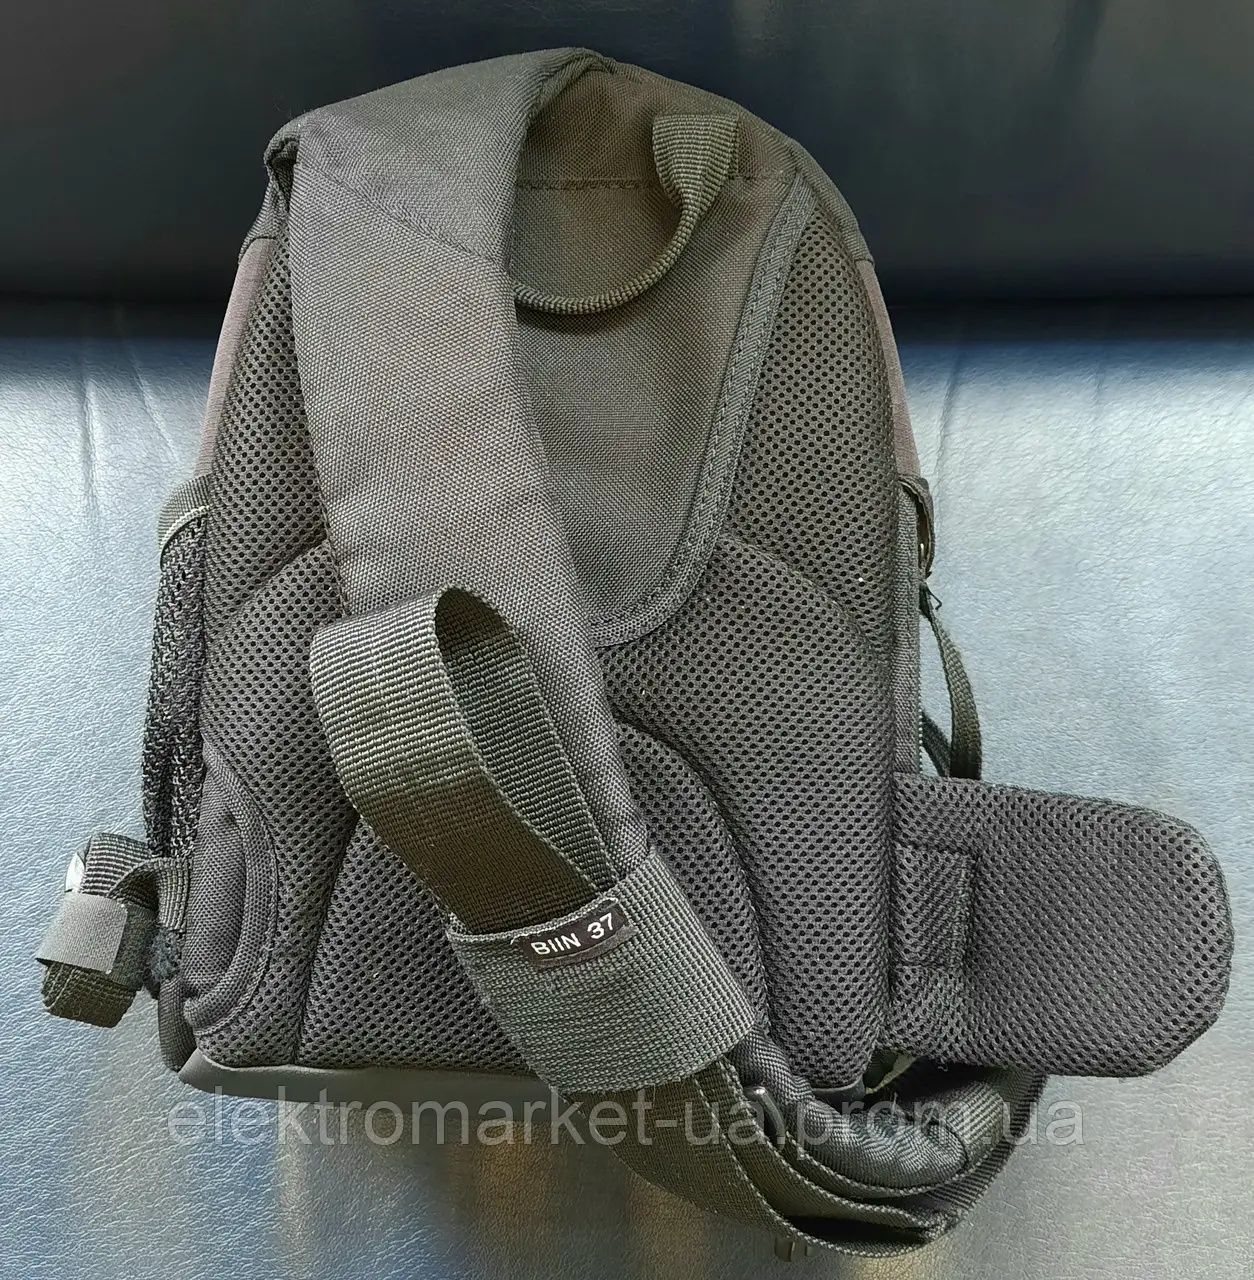 Сумка рюкзак для фототехники Vanguard BIIN 37 BLACK